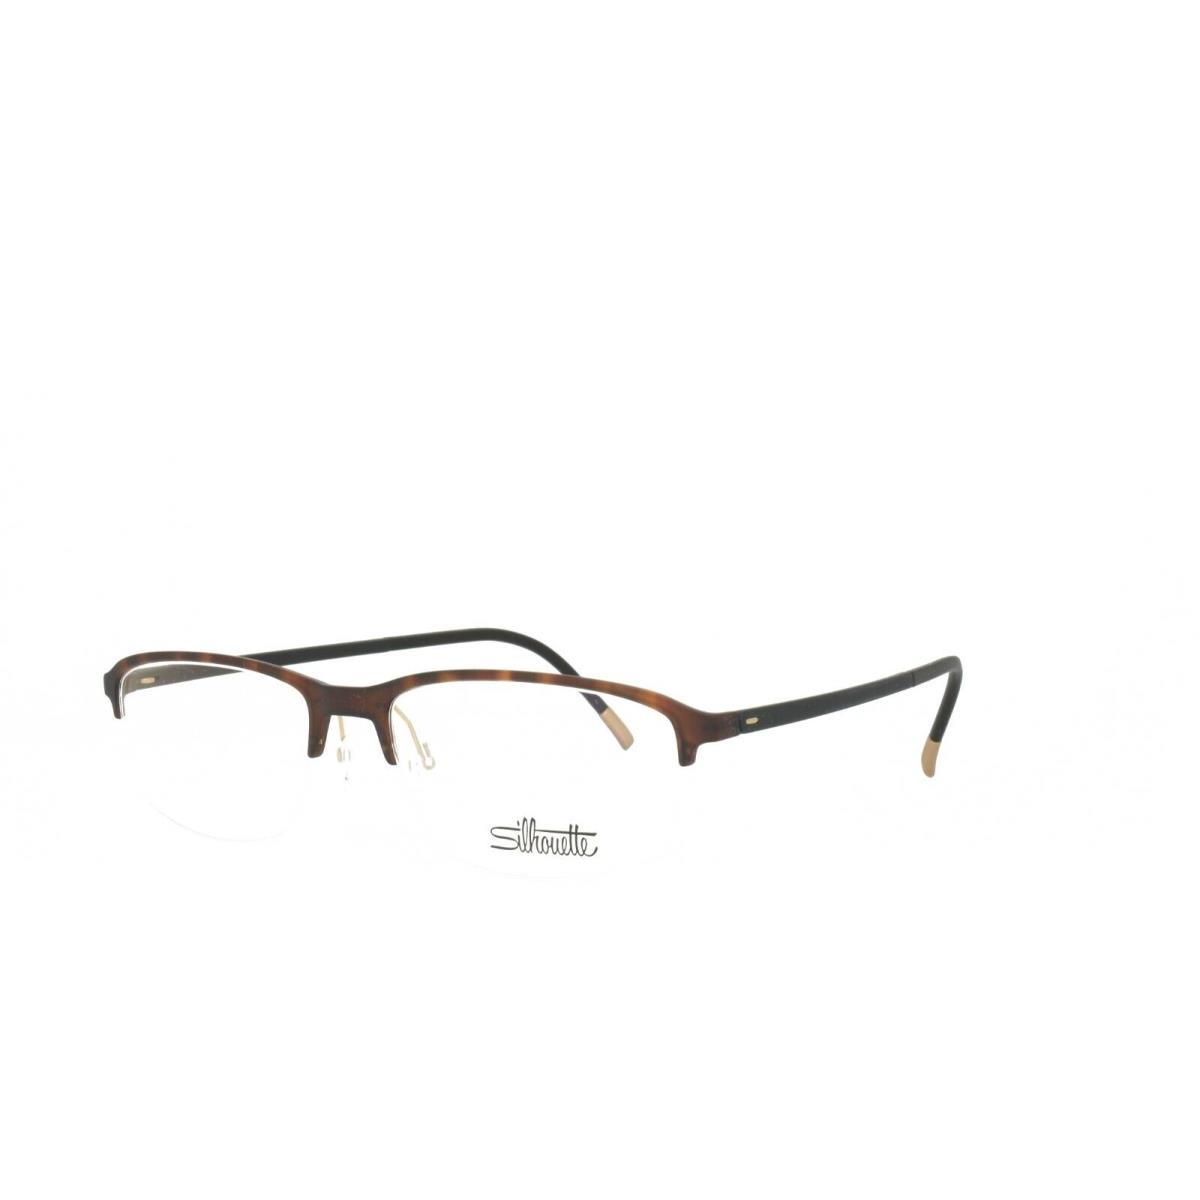 Silhouette Spx Illusion Nylor 2933 75 6330 Eyeglasses 53-17-140 Brown